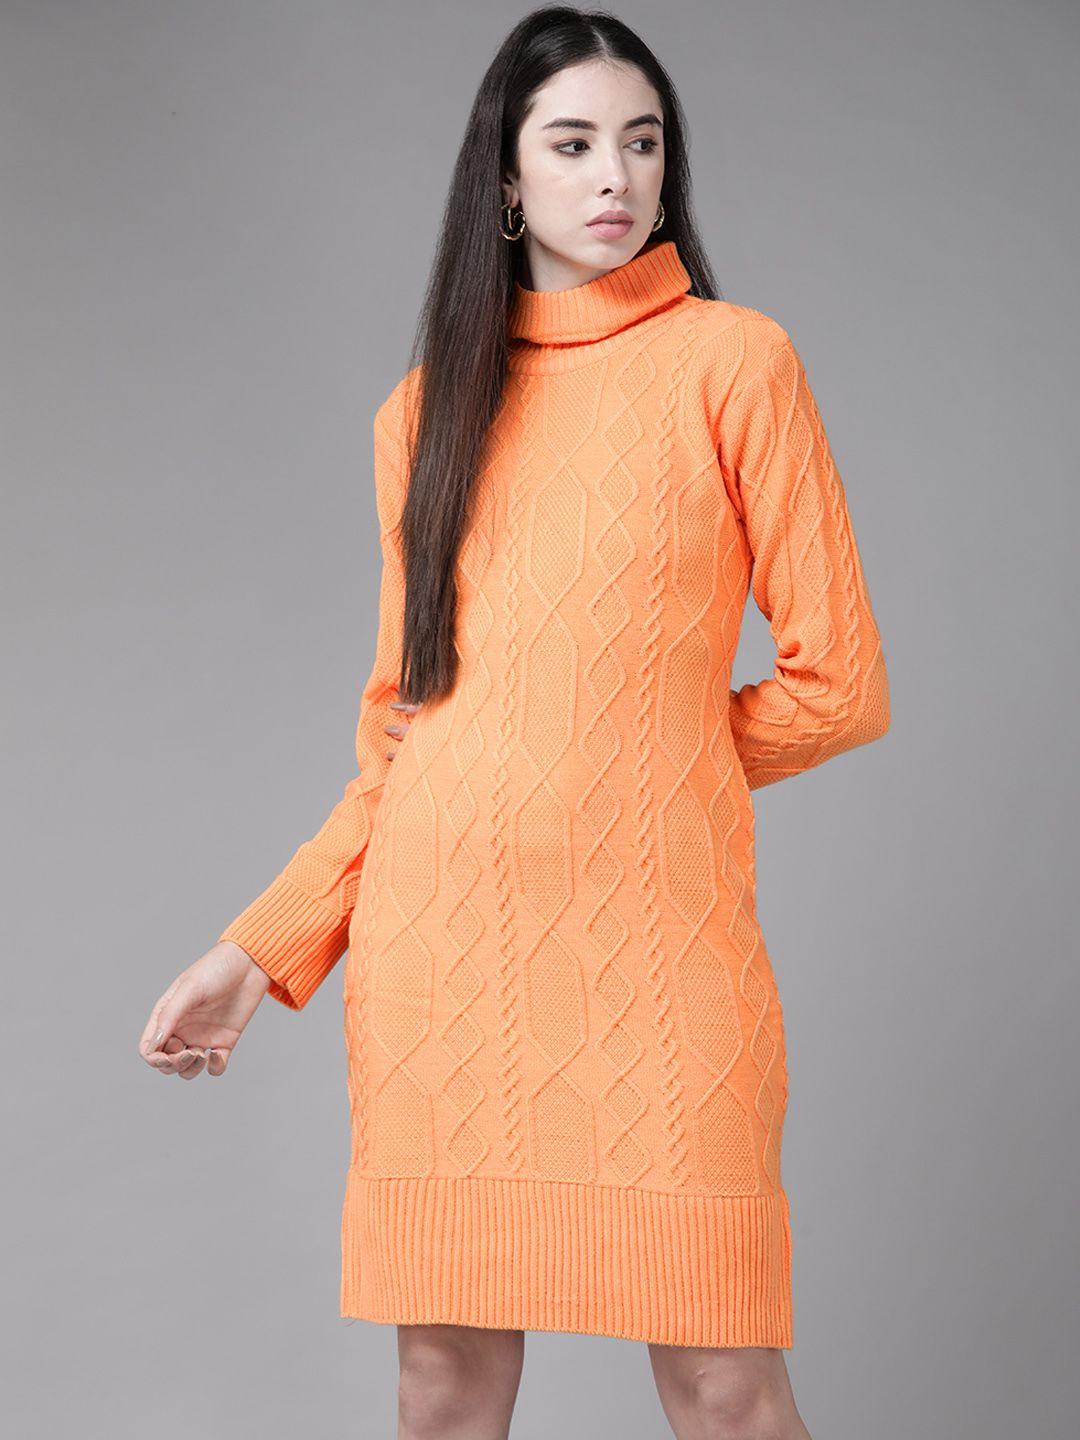 the-dry-state-orange-jumper-dress